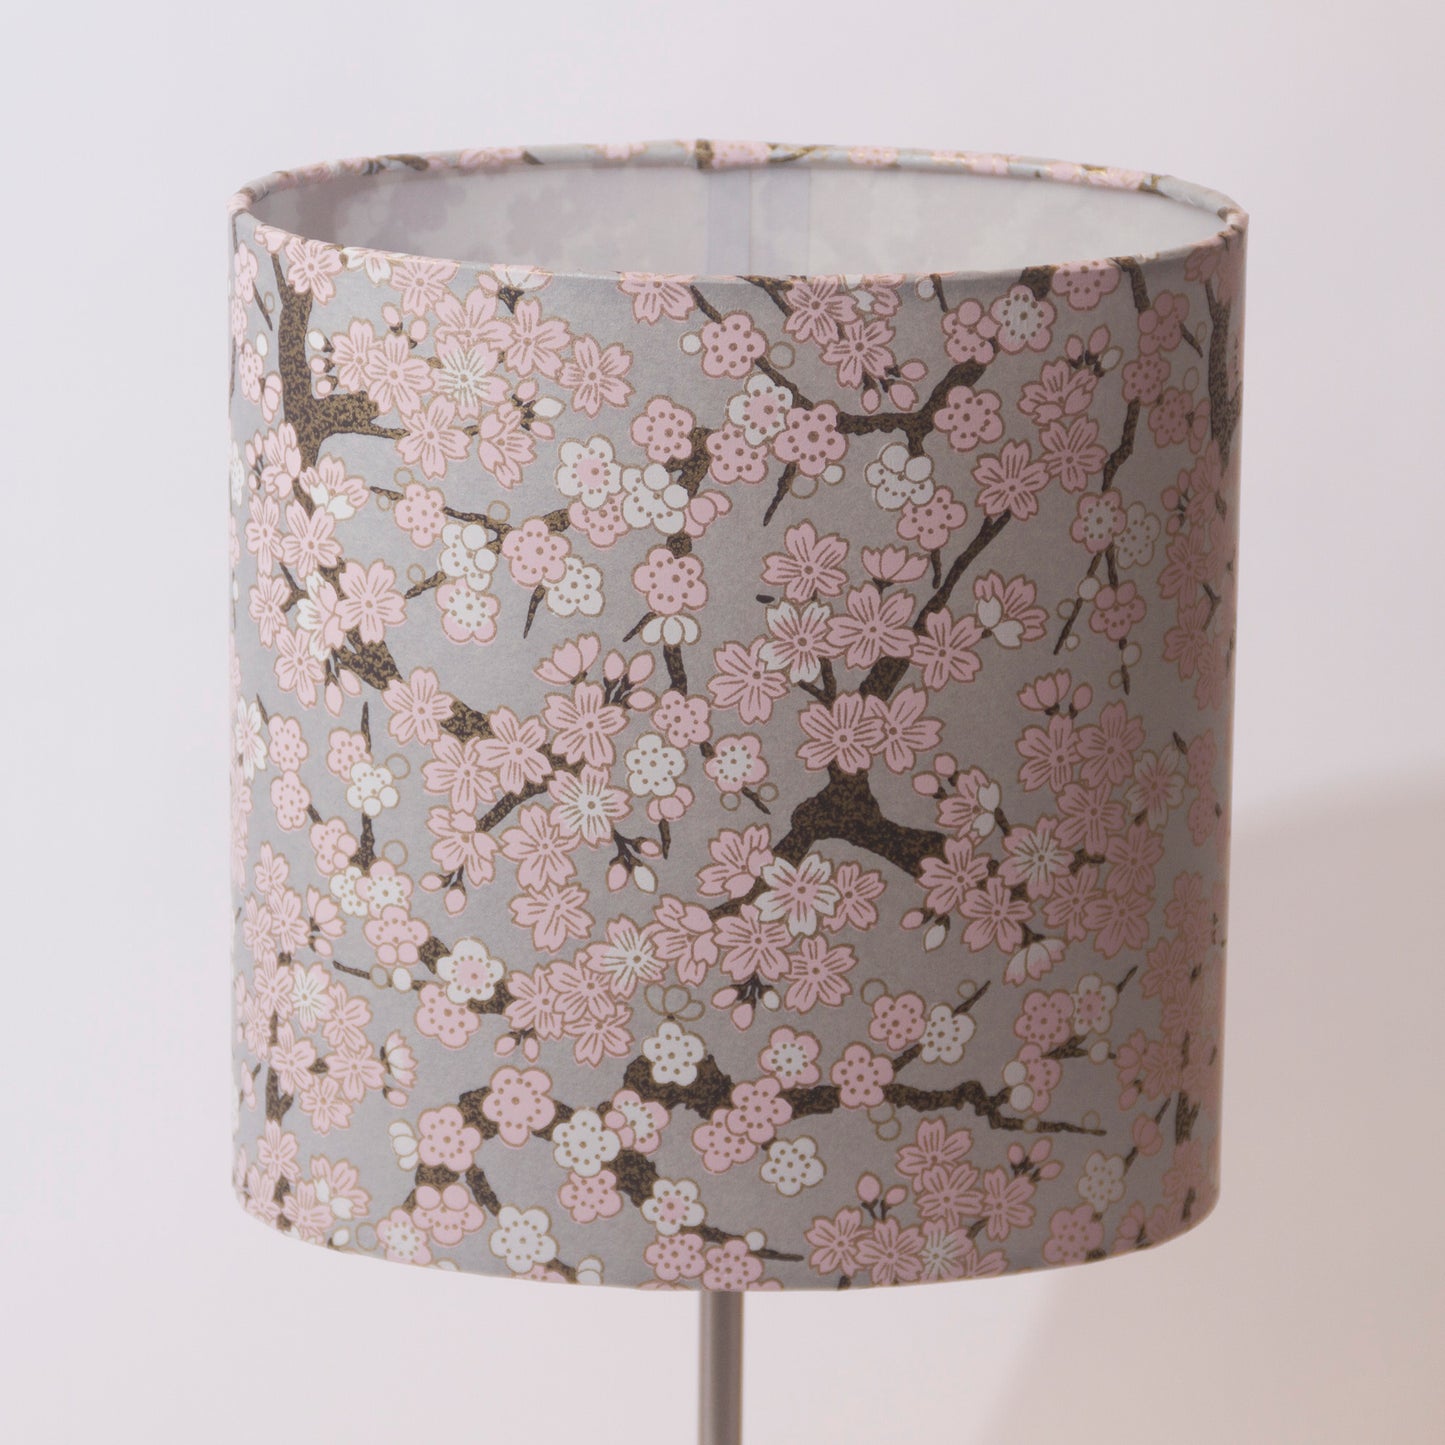 3 Tier Lamp Shade - W02 - Pink Cherry Blossom on Grey, 40cm x 20cm, 30cm x 17.5cm & 20cm x 15cm